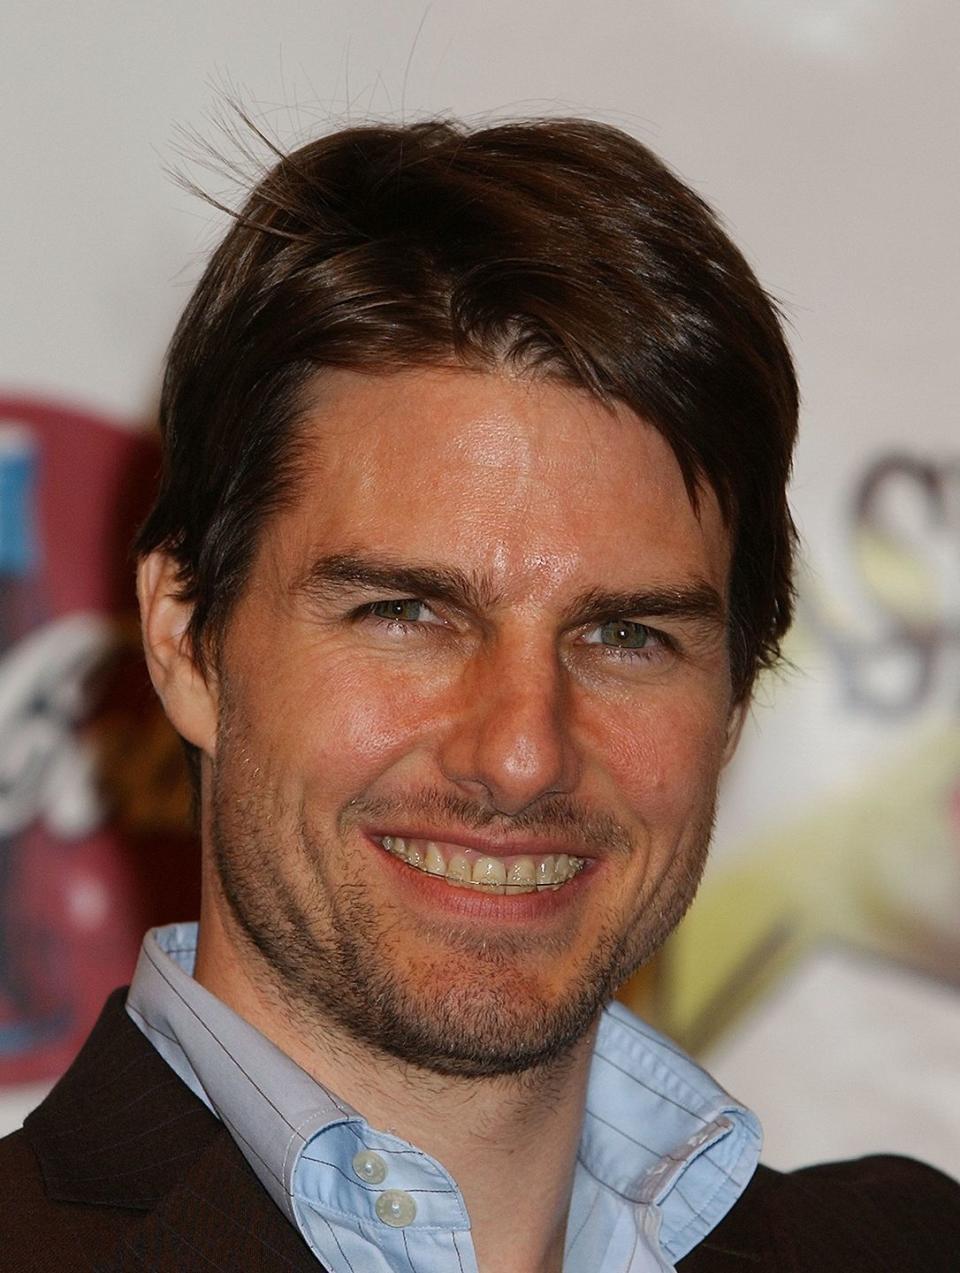 10) Tom Cruise